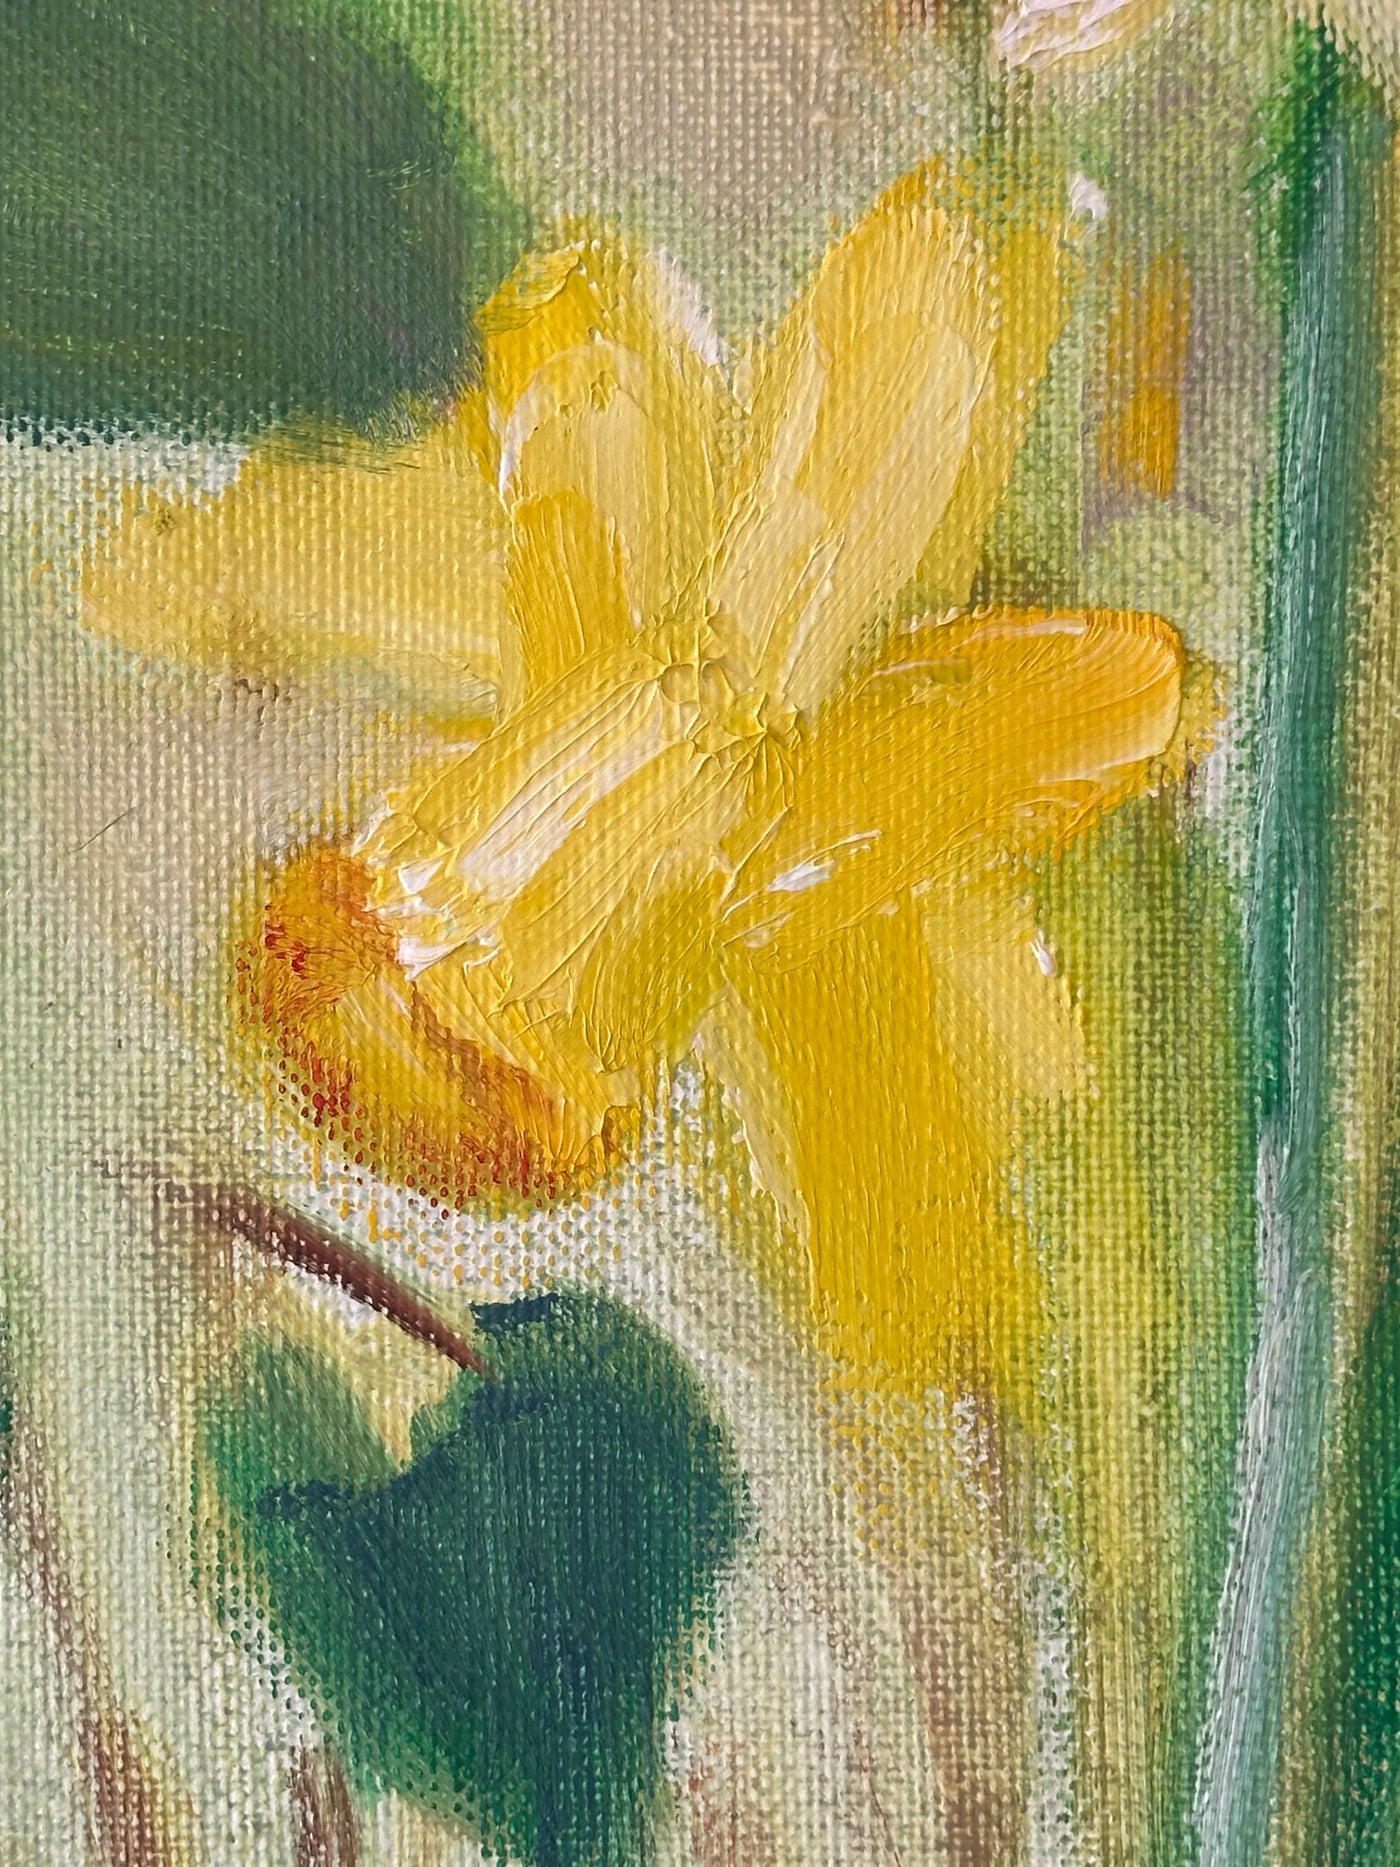 Daffodils and Pears